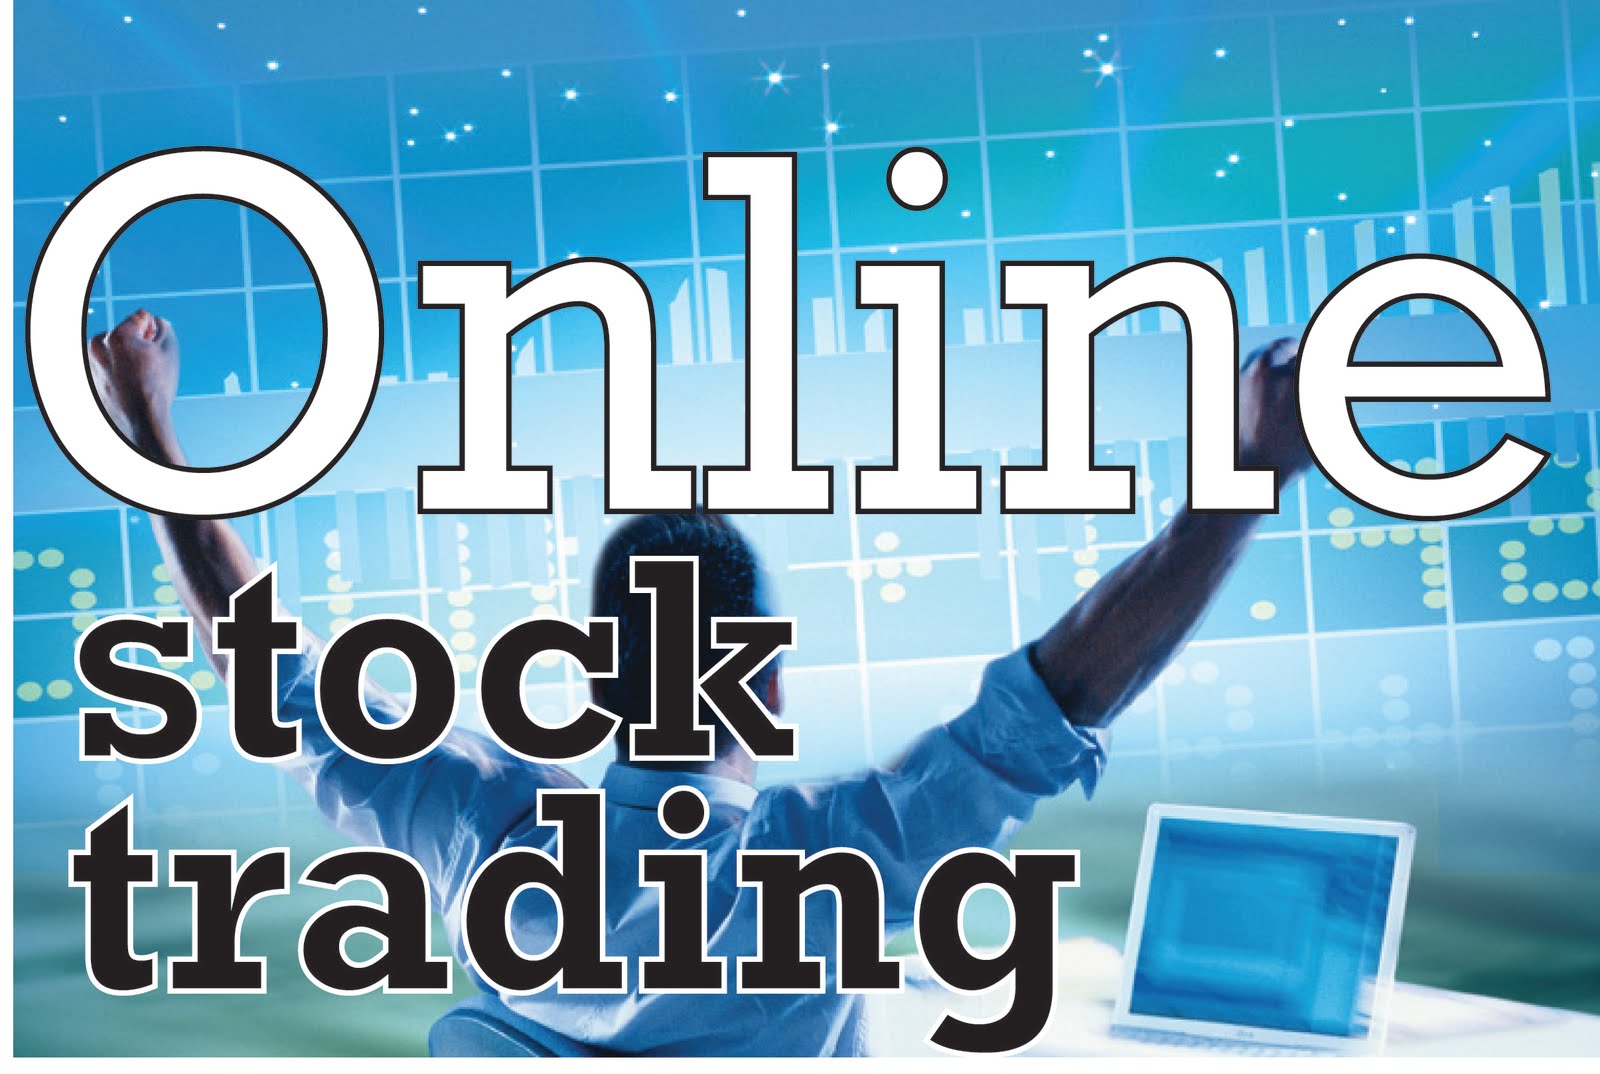 Best Stock Trading Platform